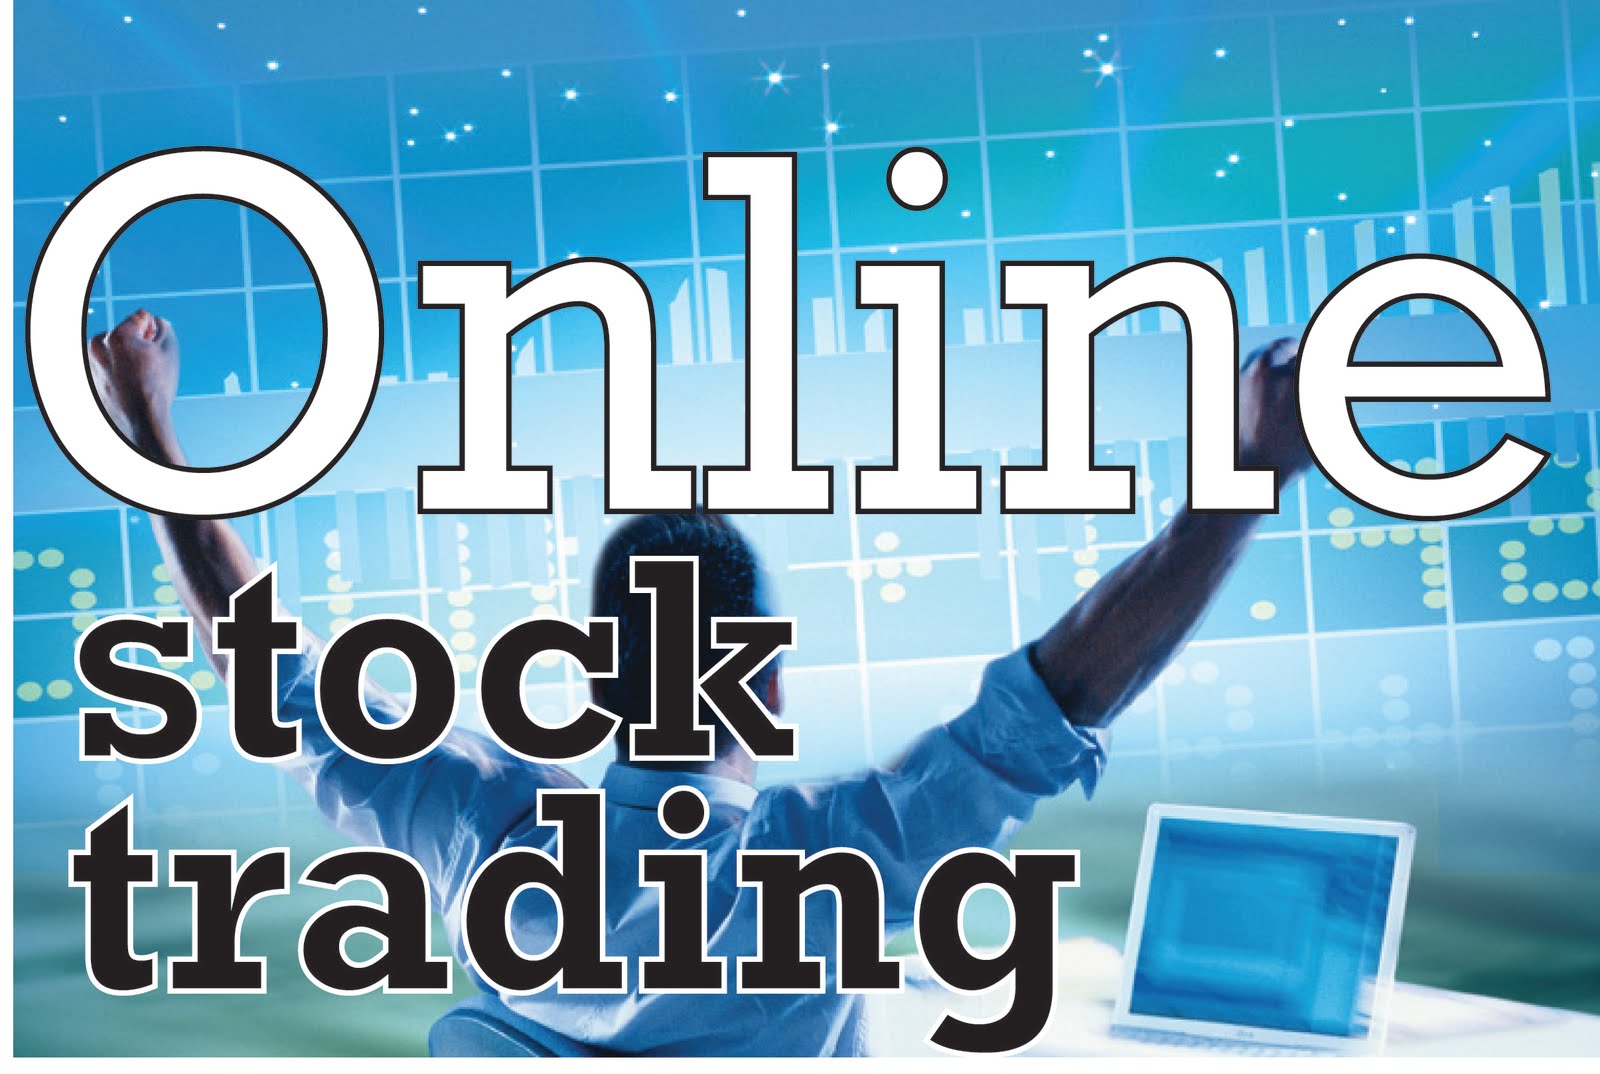 Best Stock Trading Platform